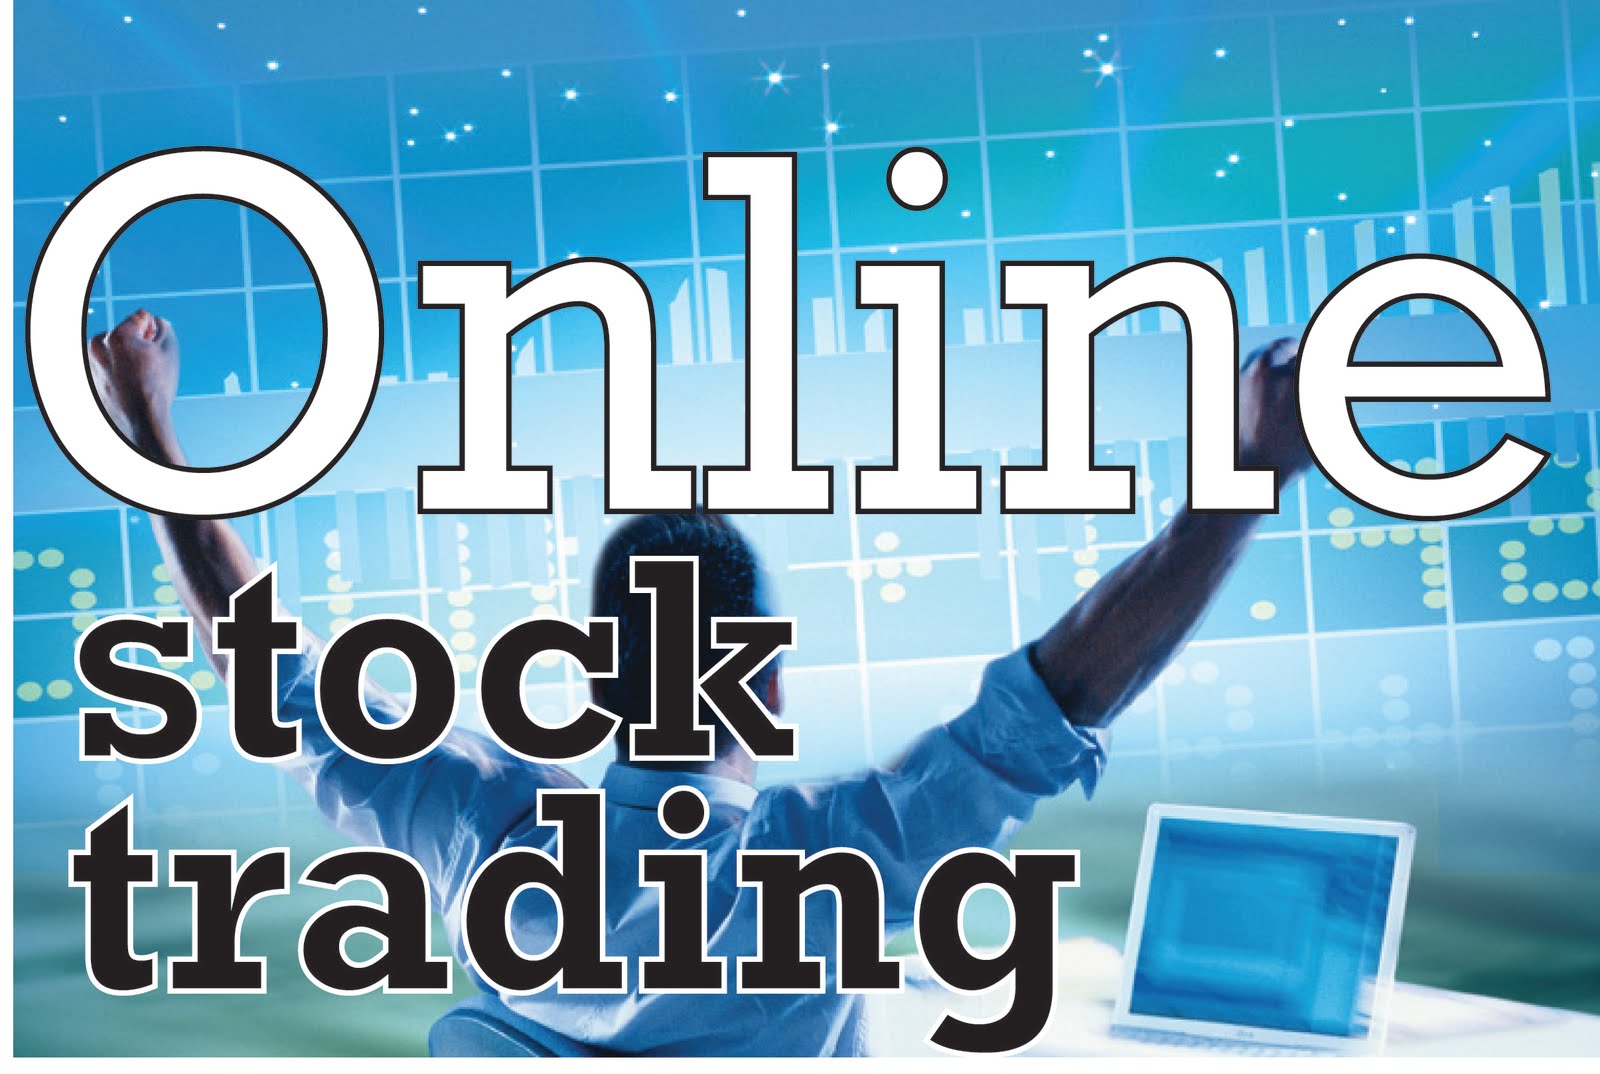 Best Stock Trading Platform